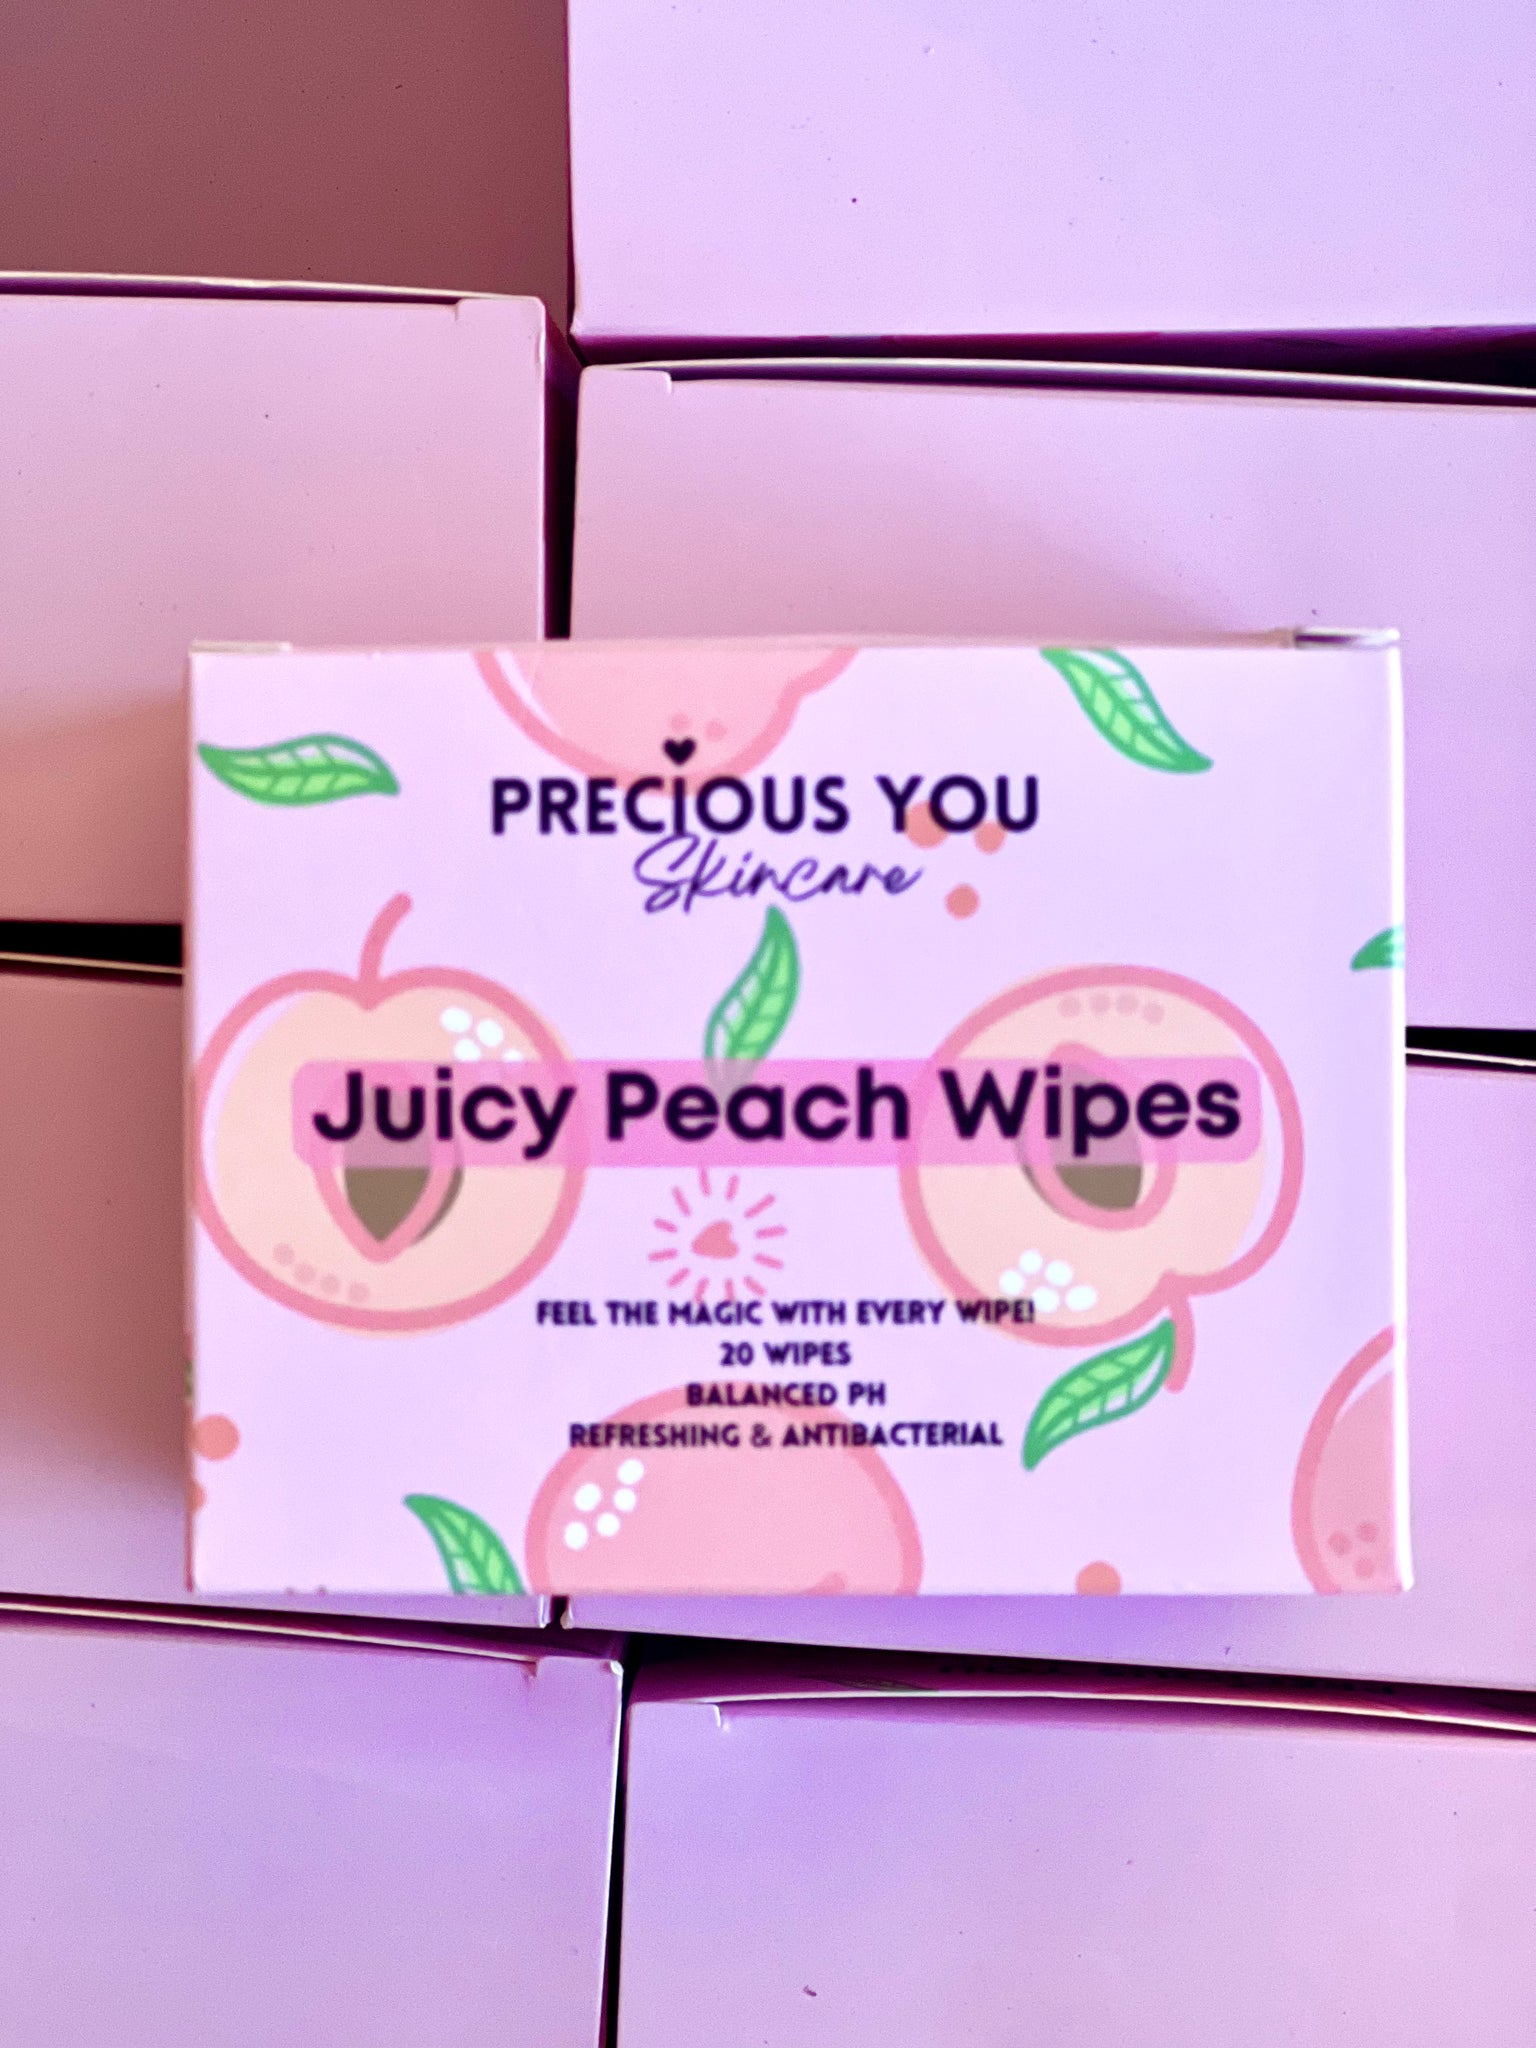 Juicy Peach feminine wipes